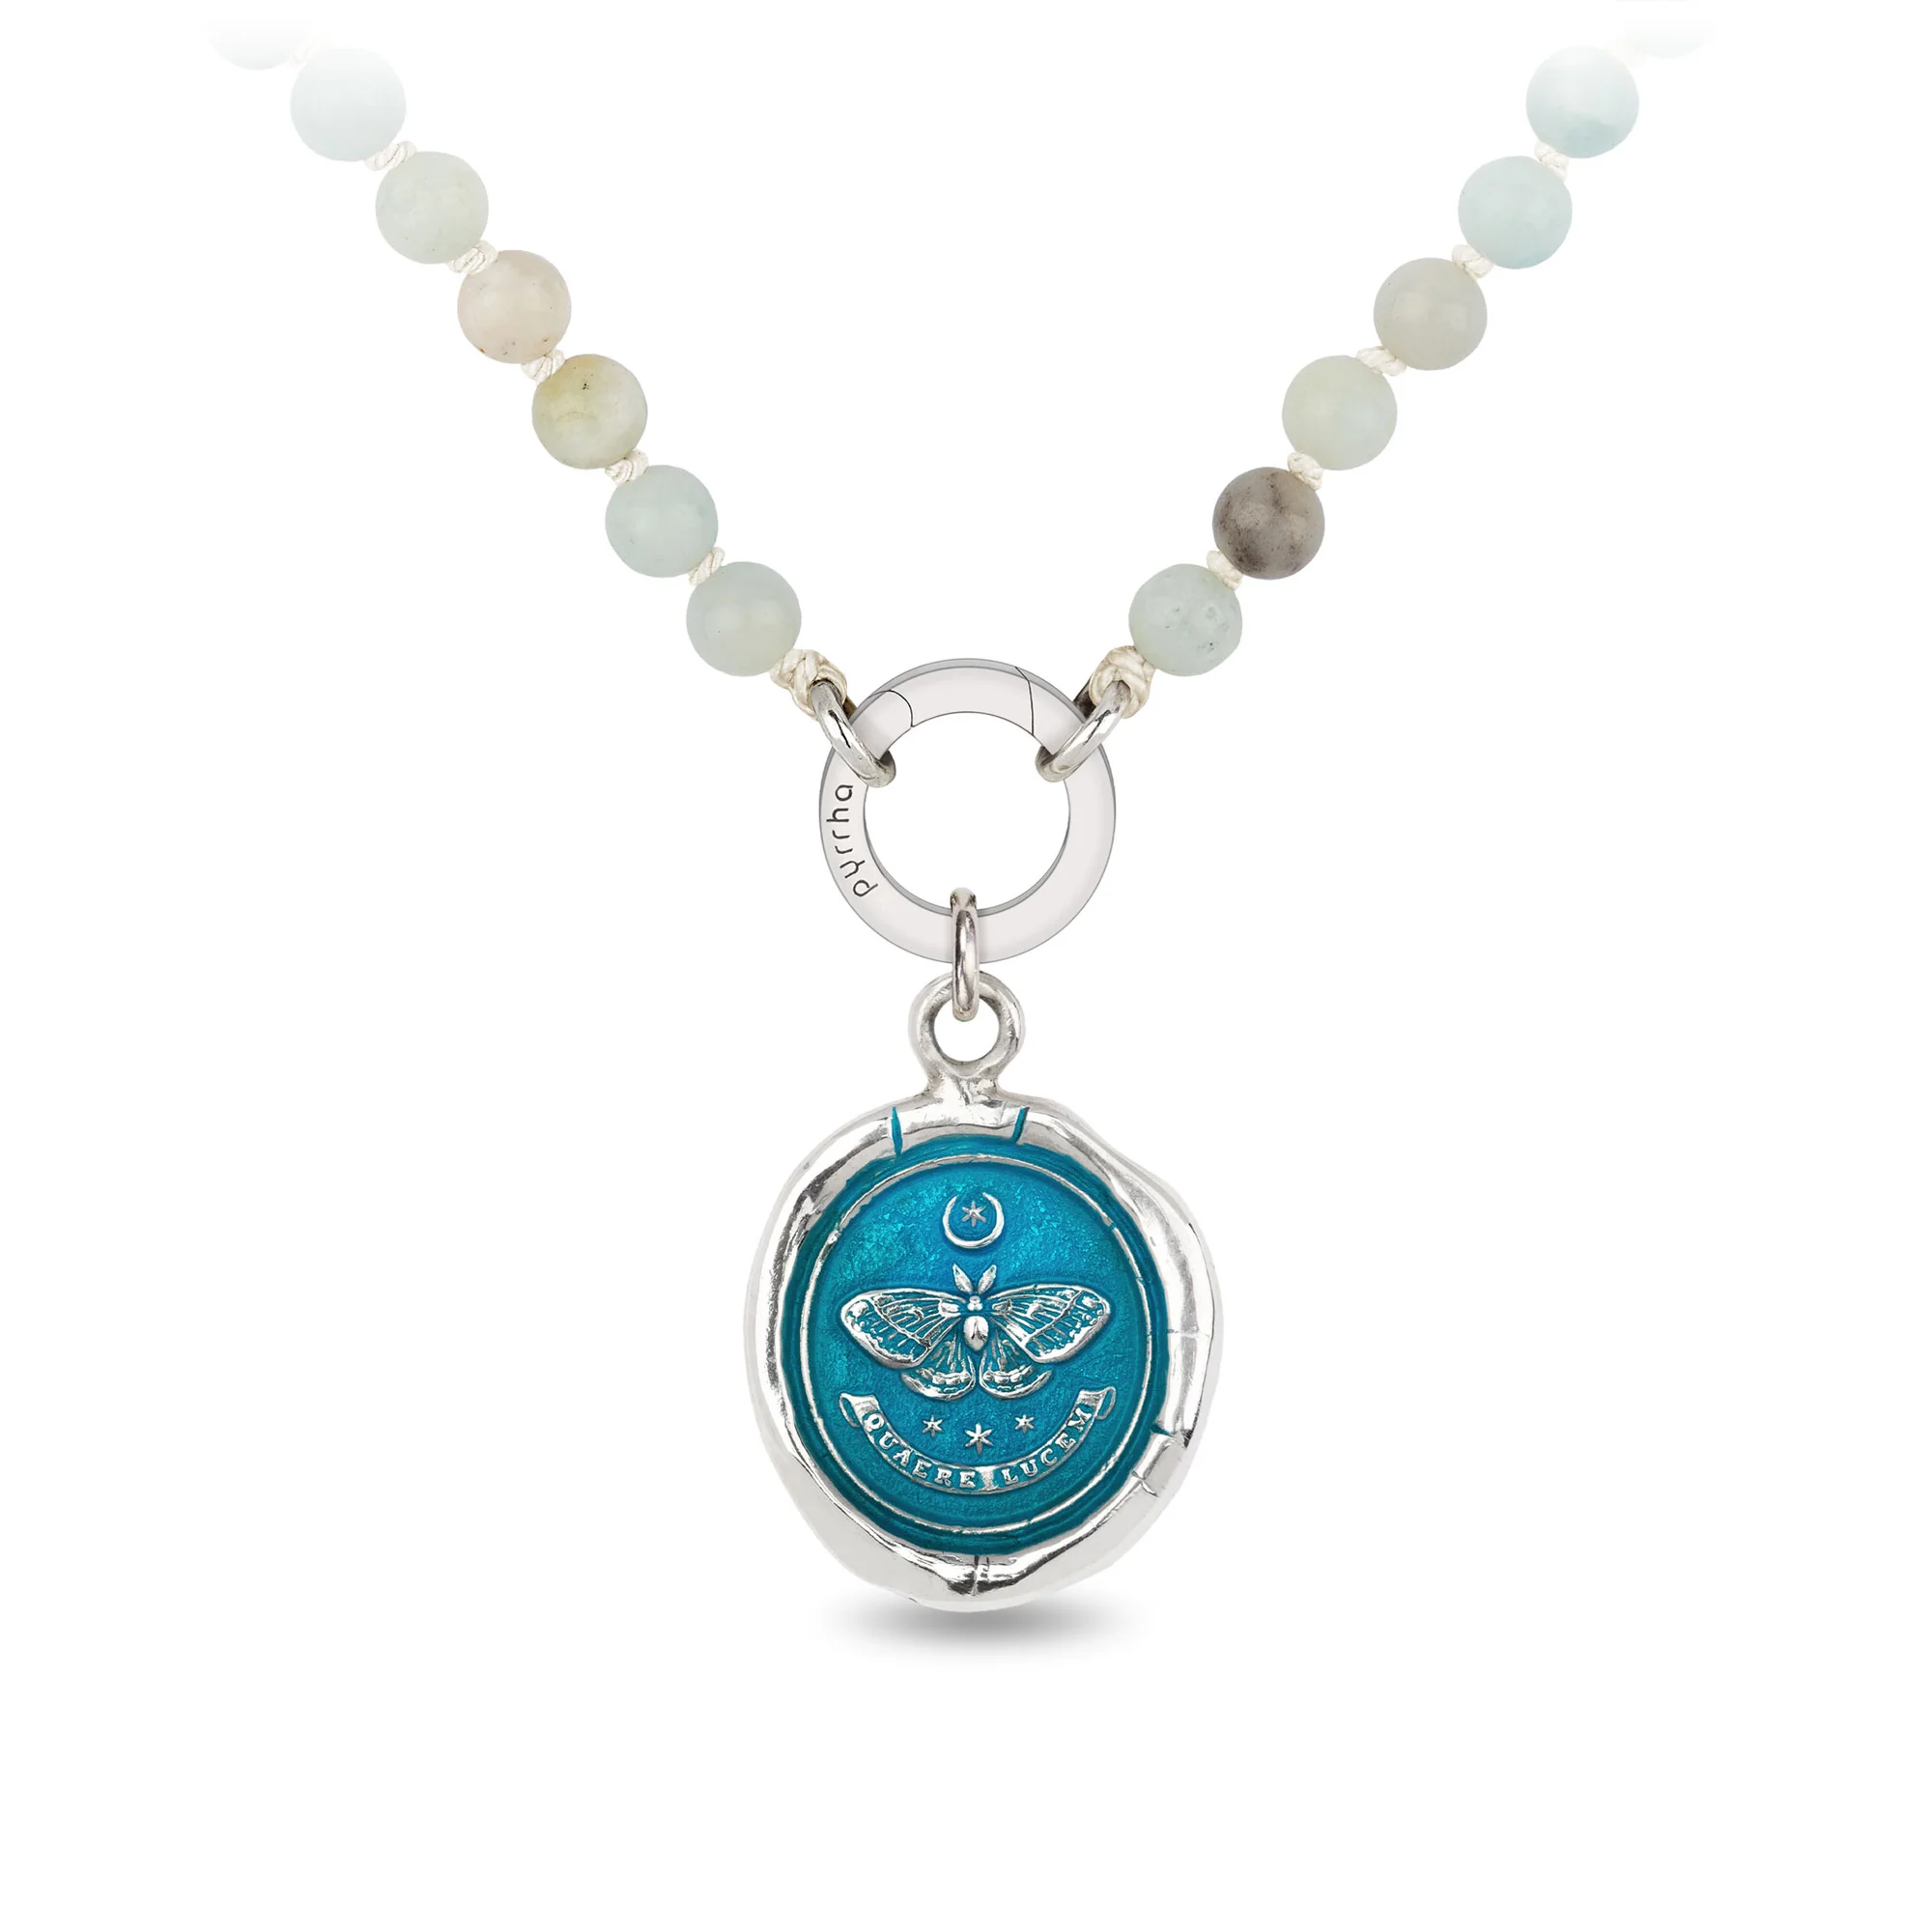 Seek The Light Sautoir Necklace - True Colors | Magpie Jewellery